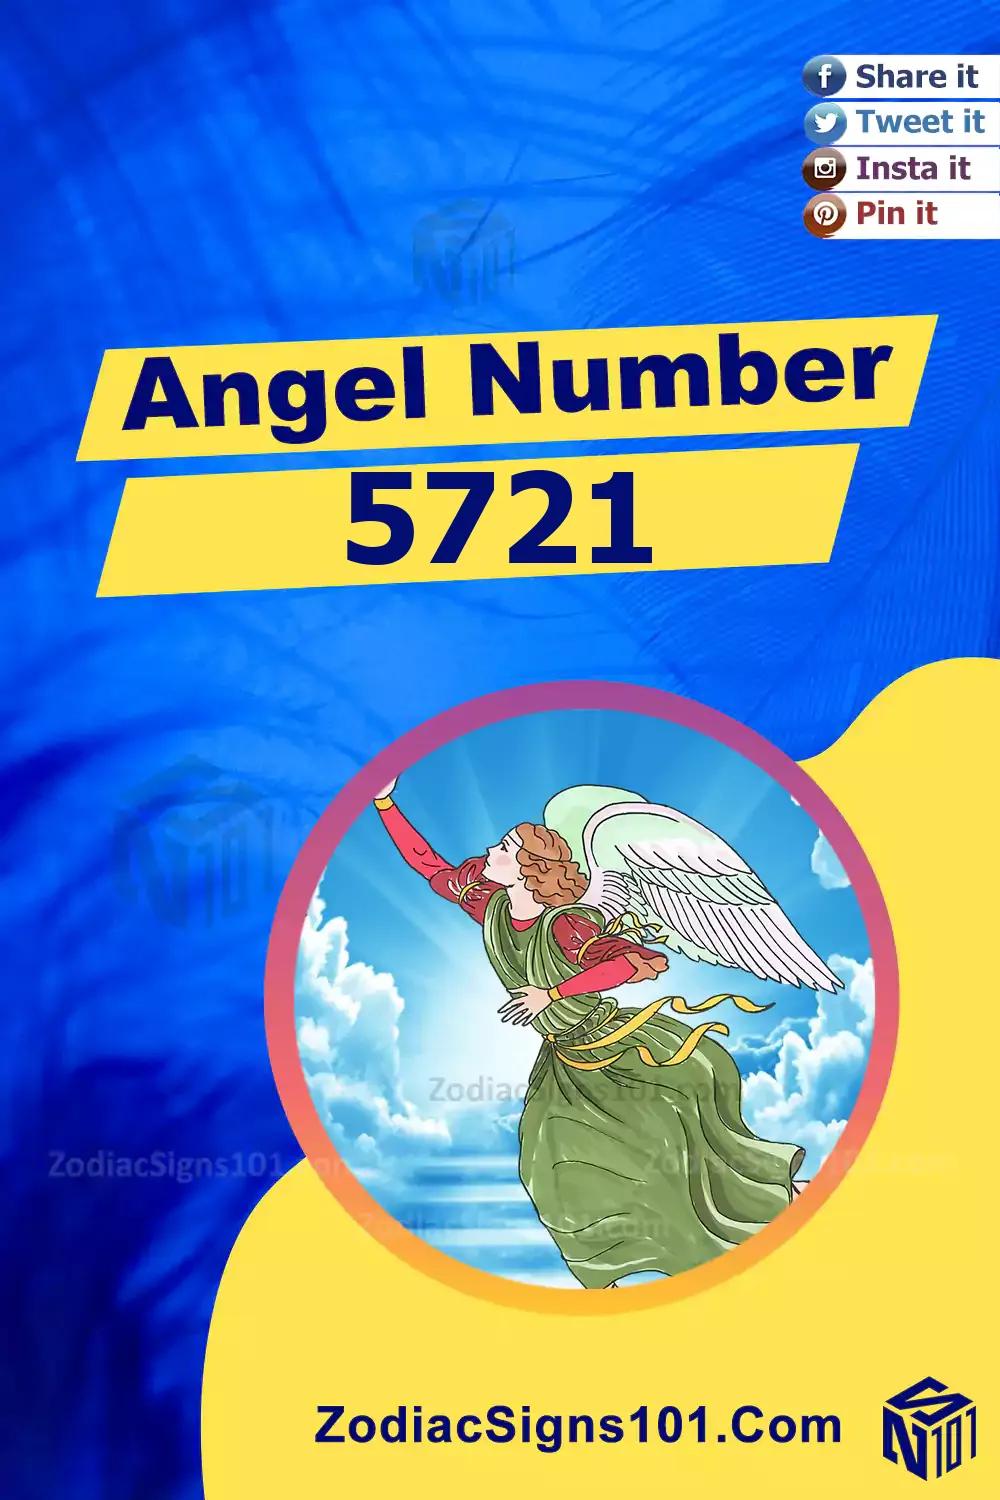 5721-Angel-Number-Meaning.jpg